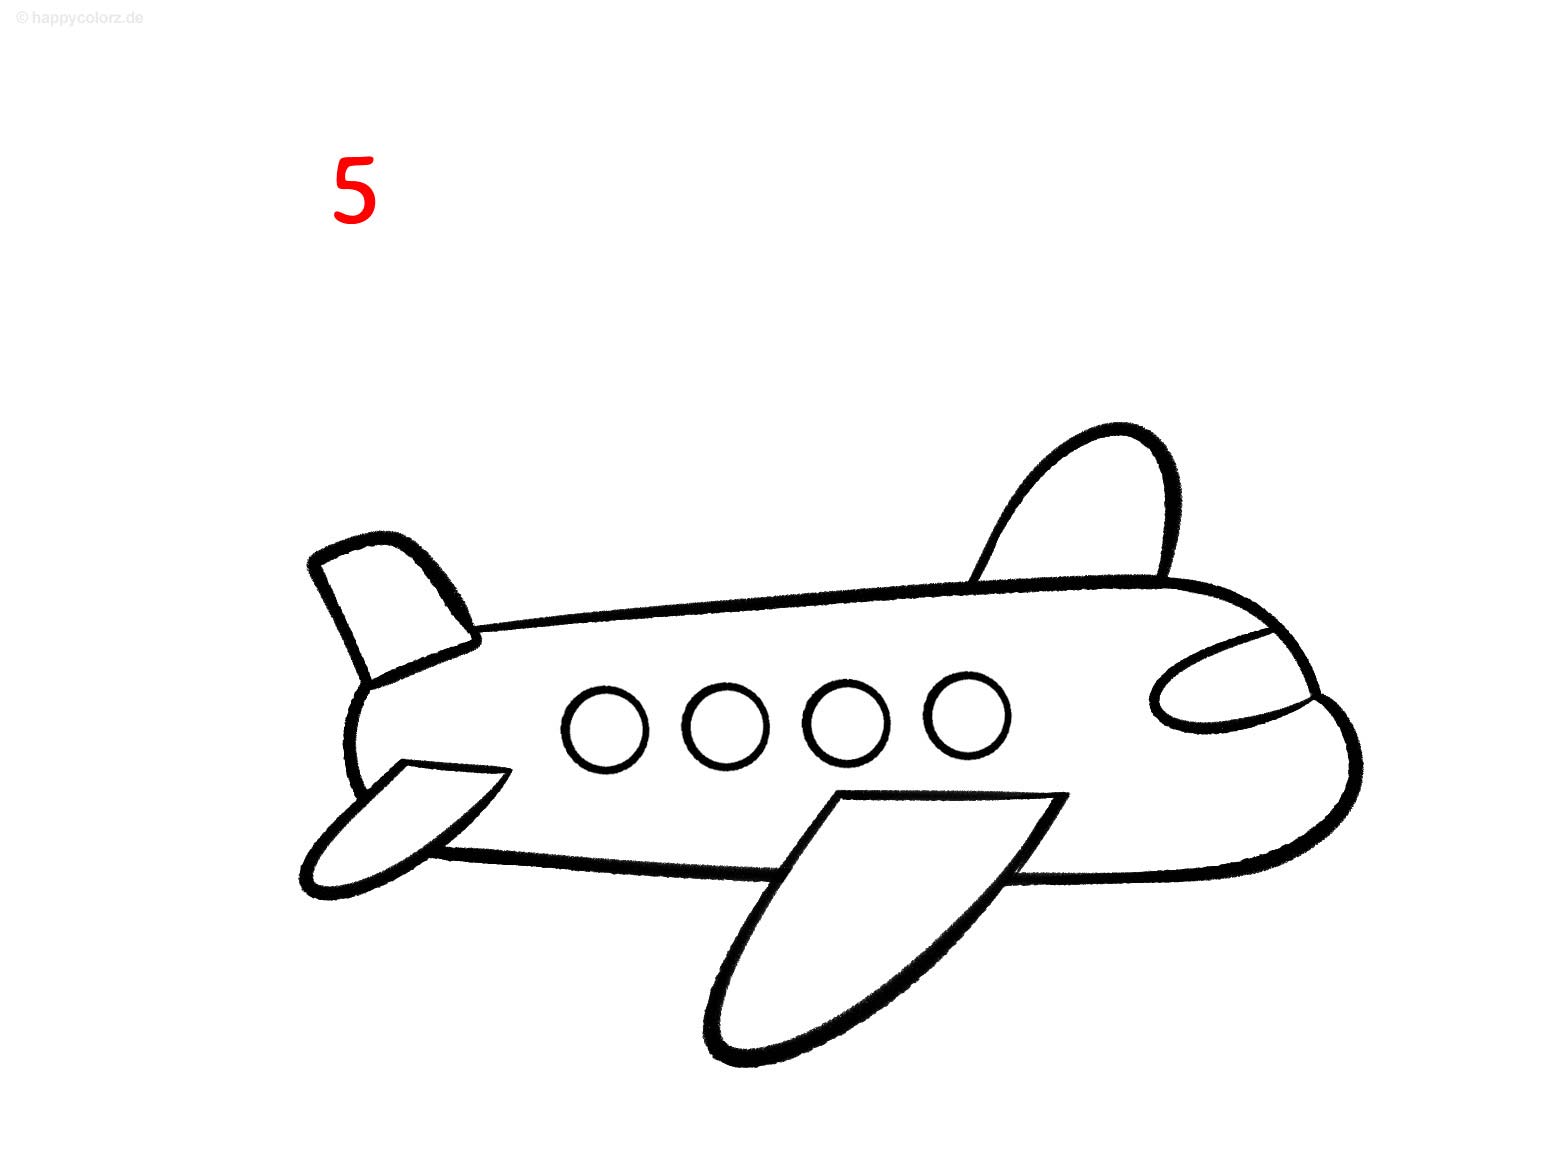 Flugzeug malen - Schritt für Schritt